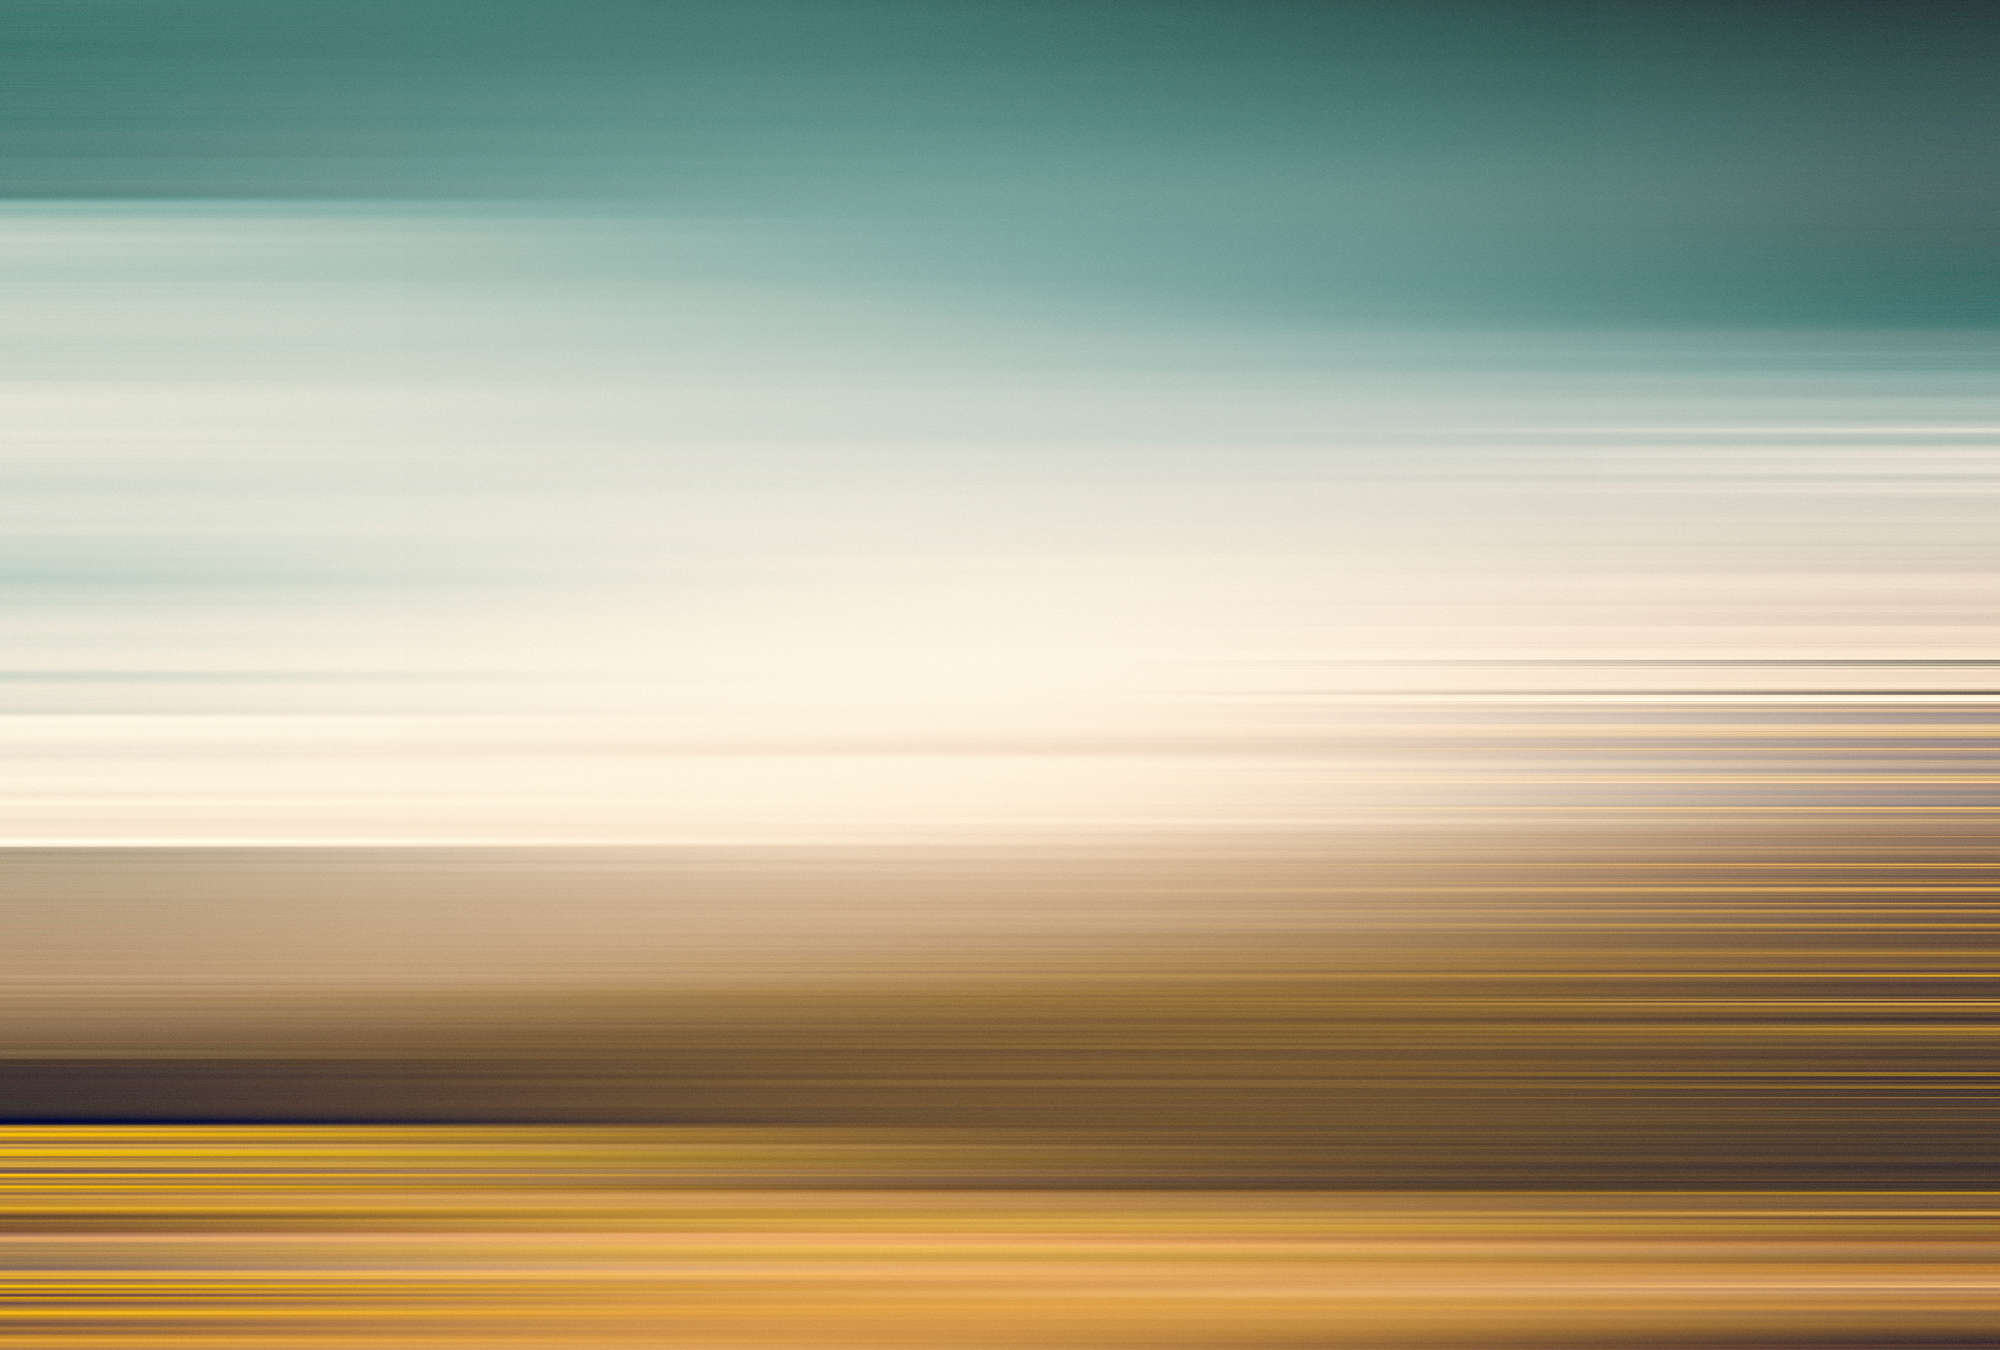             Horizon 3 – Fototapete Landschaft abstrakt mit Farbdesign
        